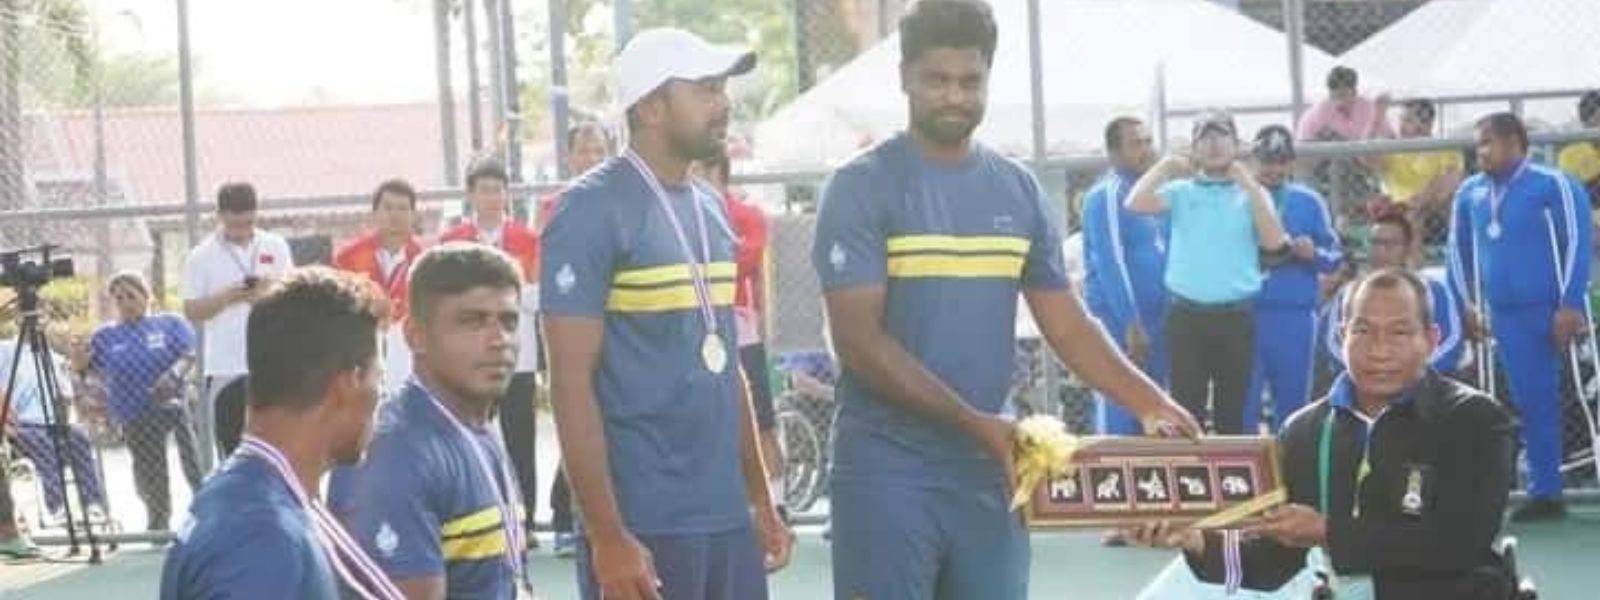 Sri Lanka champions at Wheelchair Tennis